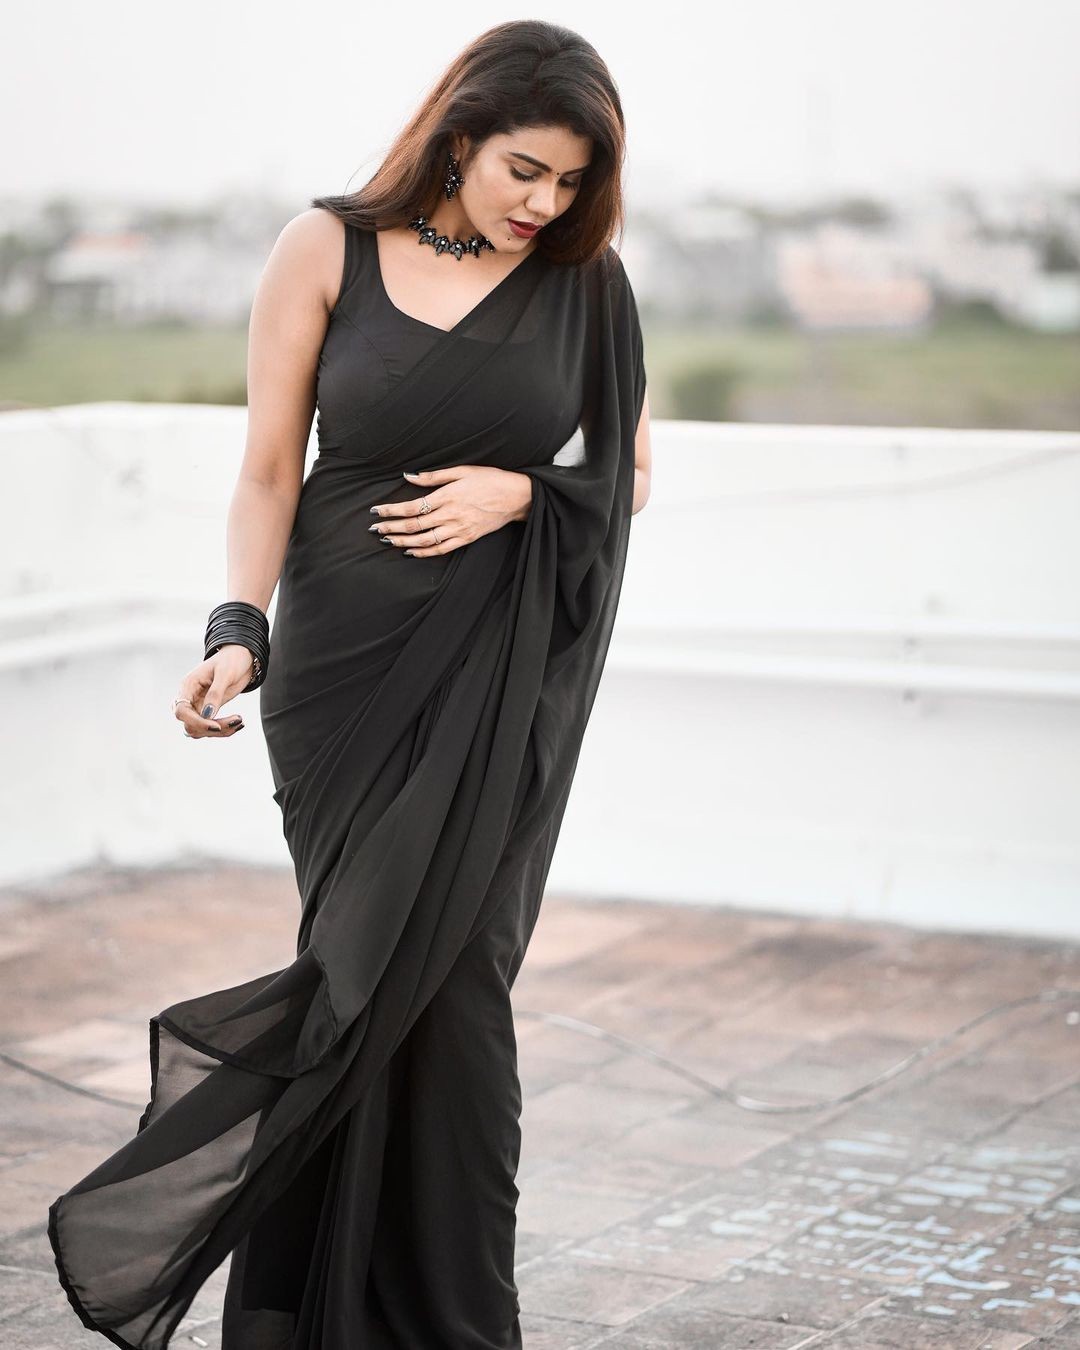 Stunning Nivisha in a black saree.